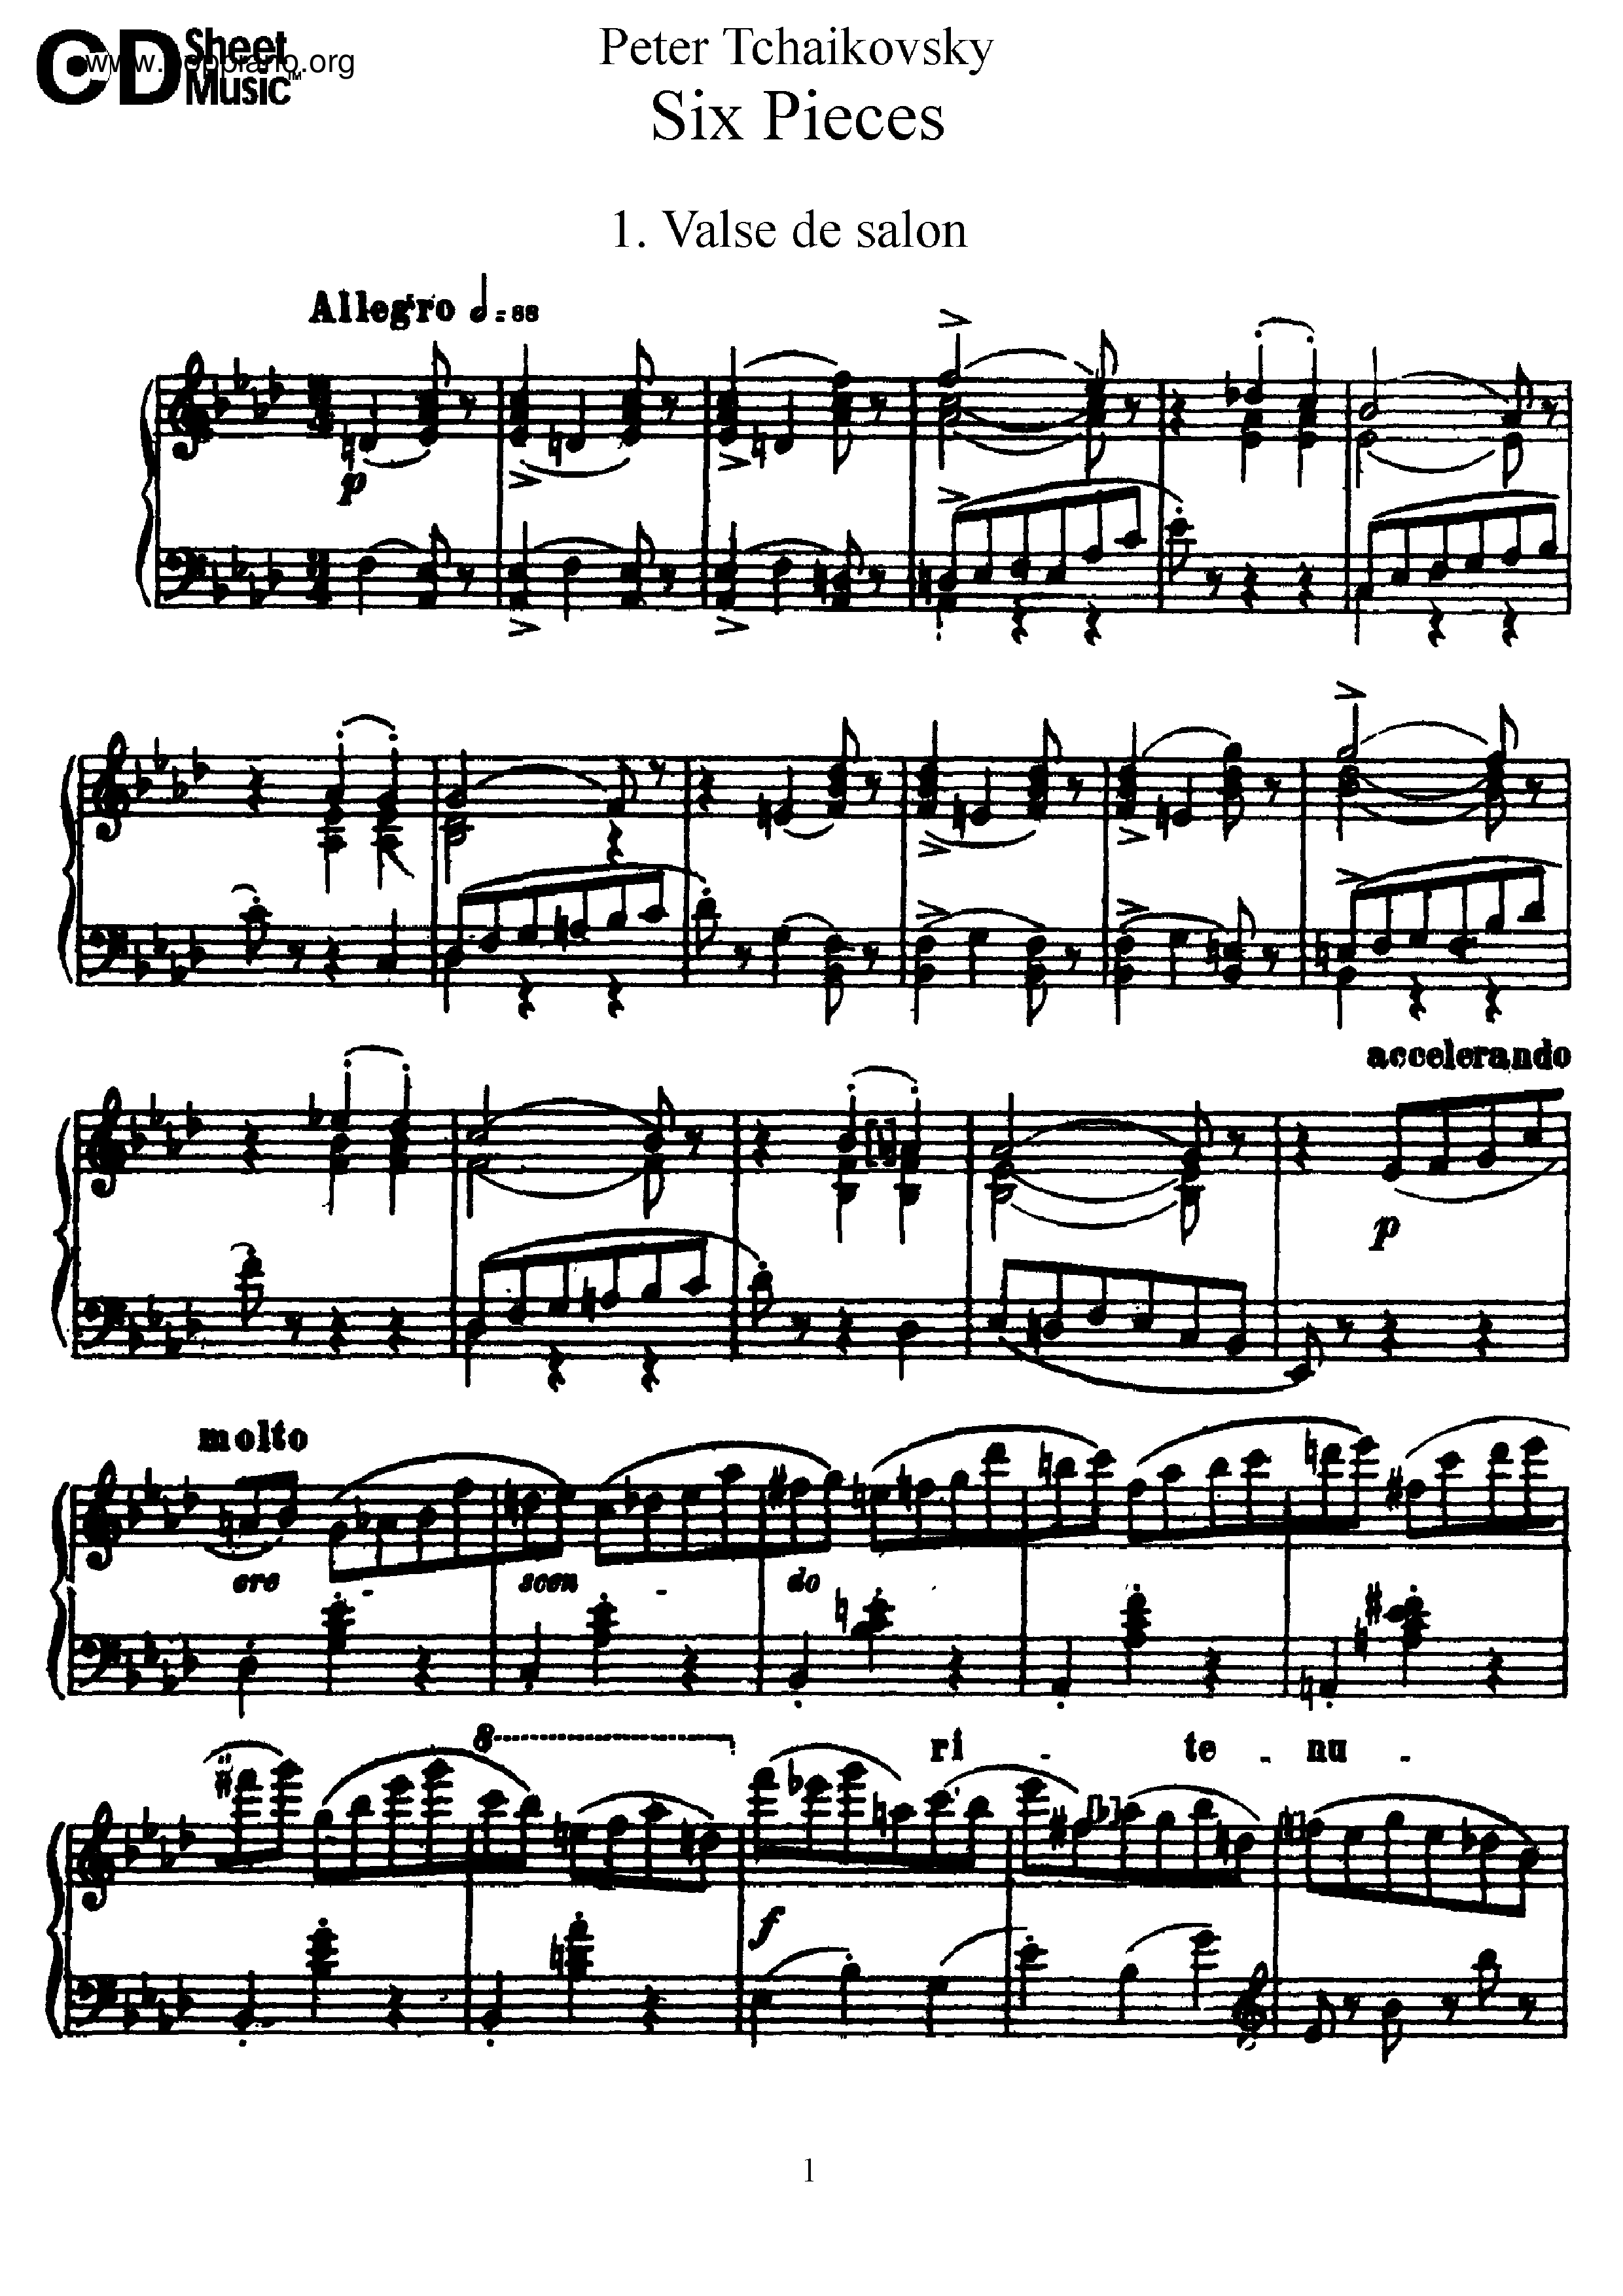 6 Pieces, Op.51 Score